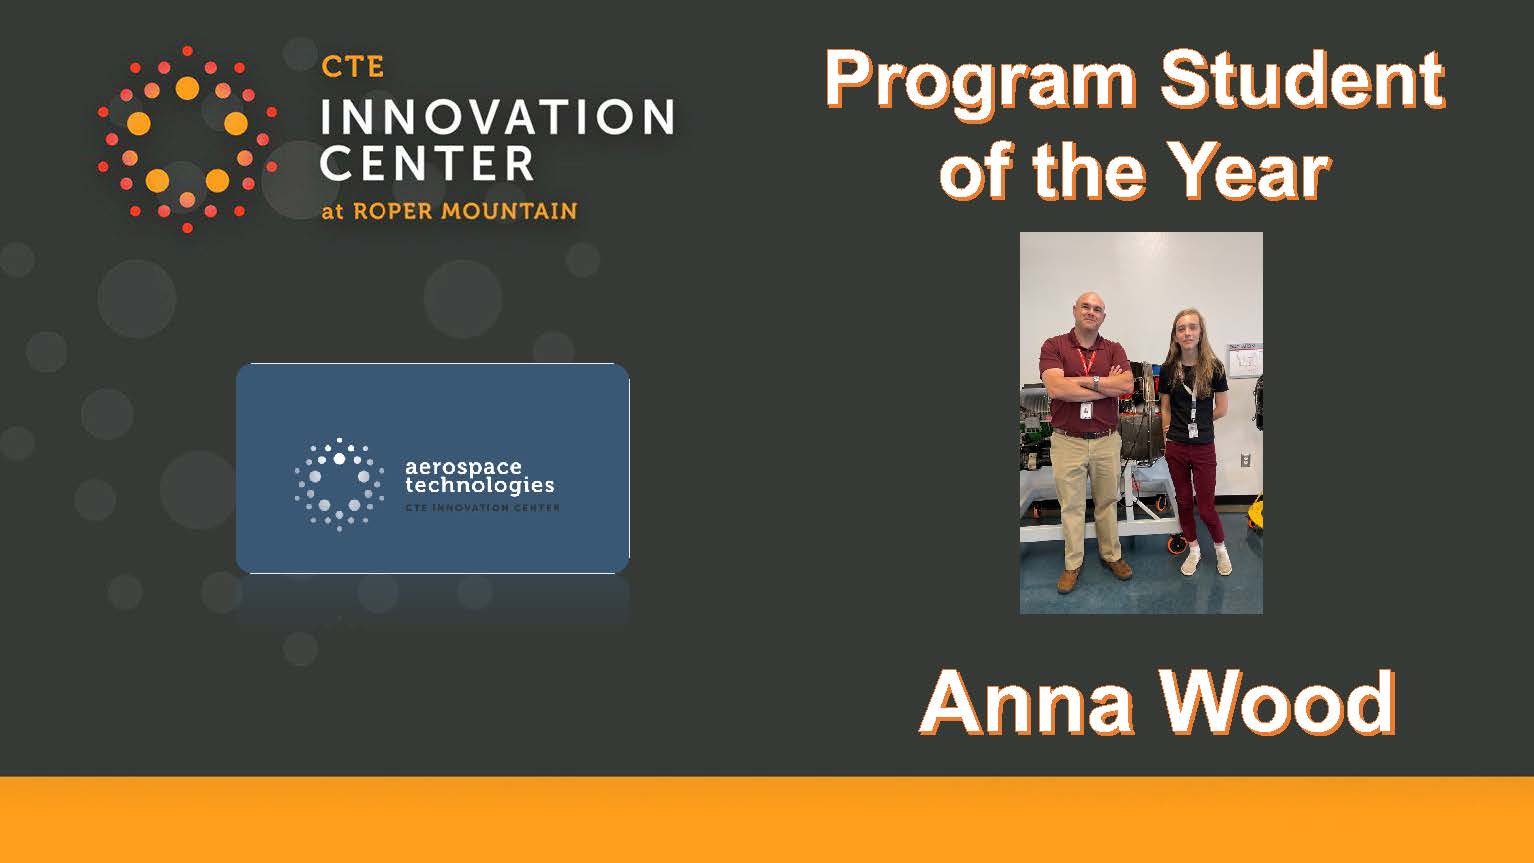 Program Student of the Year Aerospace Anna Wood